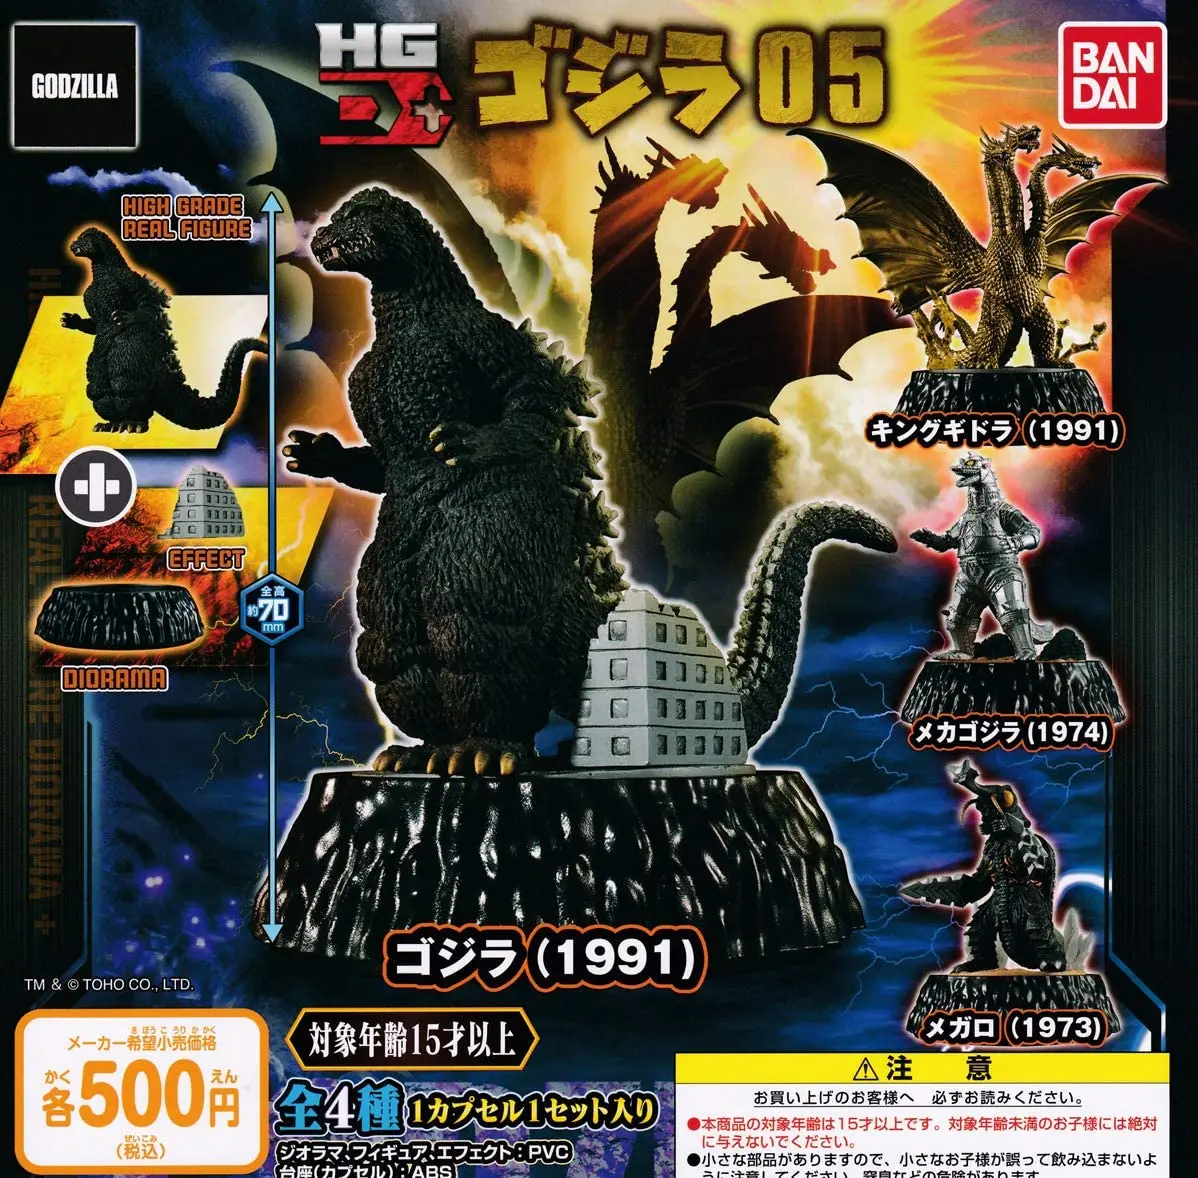 Bandai Godzilla HG D Godzilla 01 Mini Figure King Ghidorah 2019 Japan import 